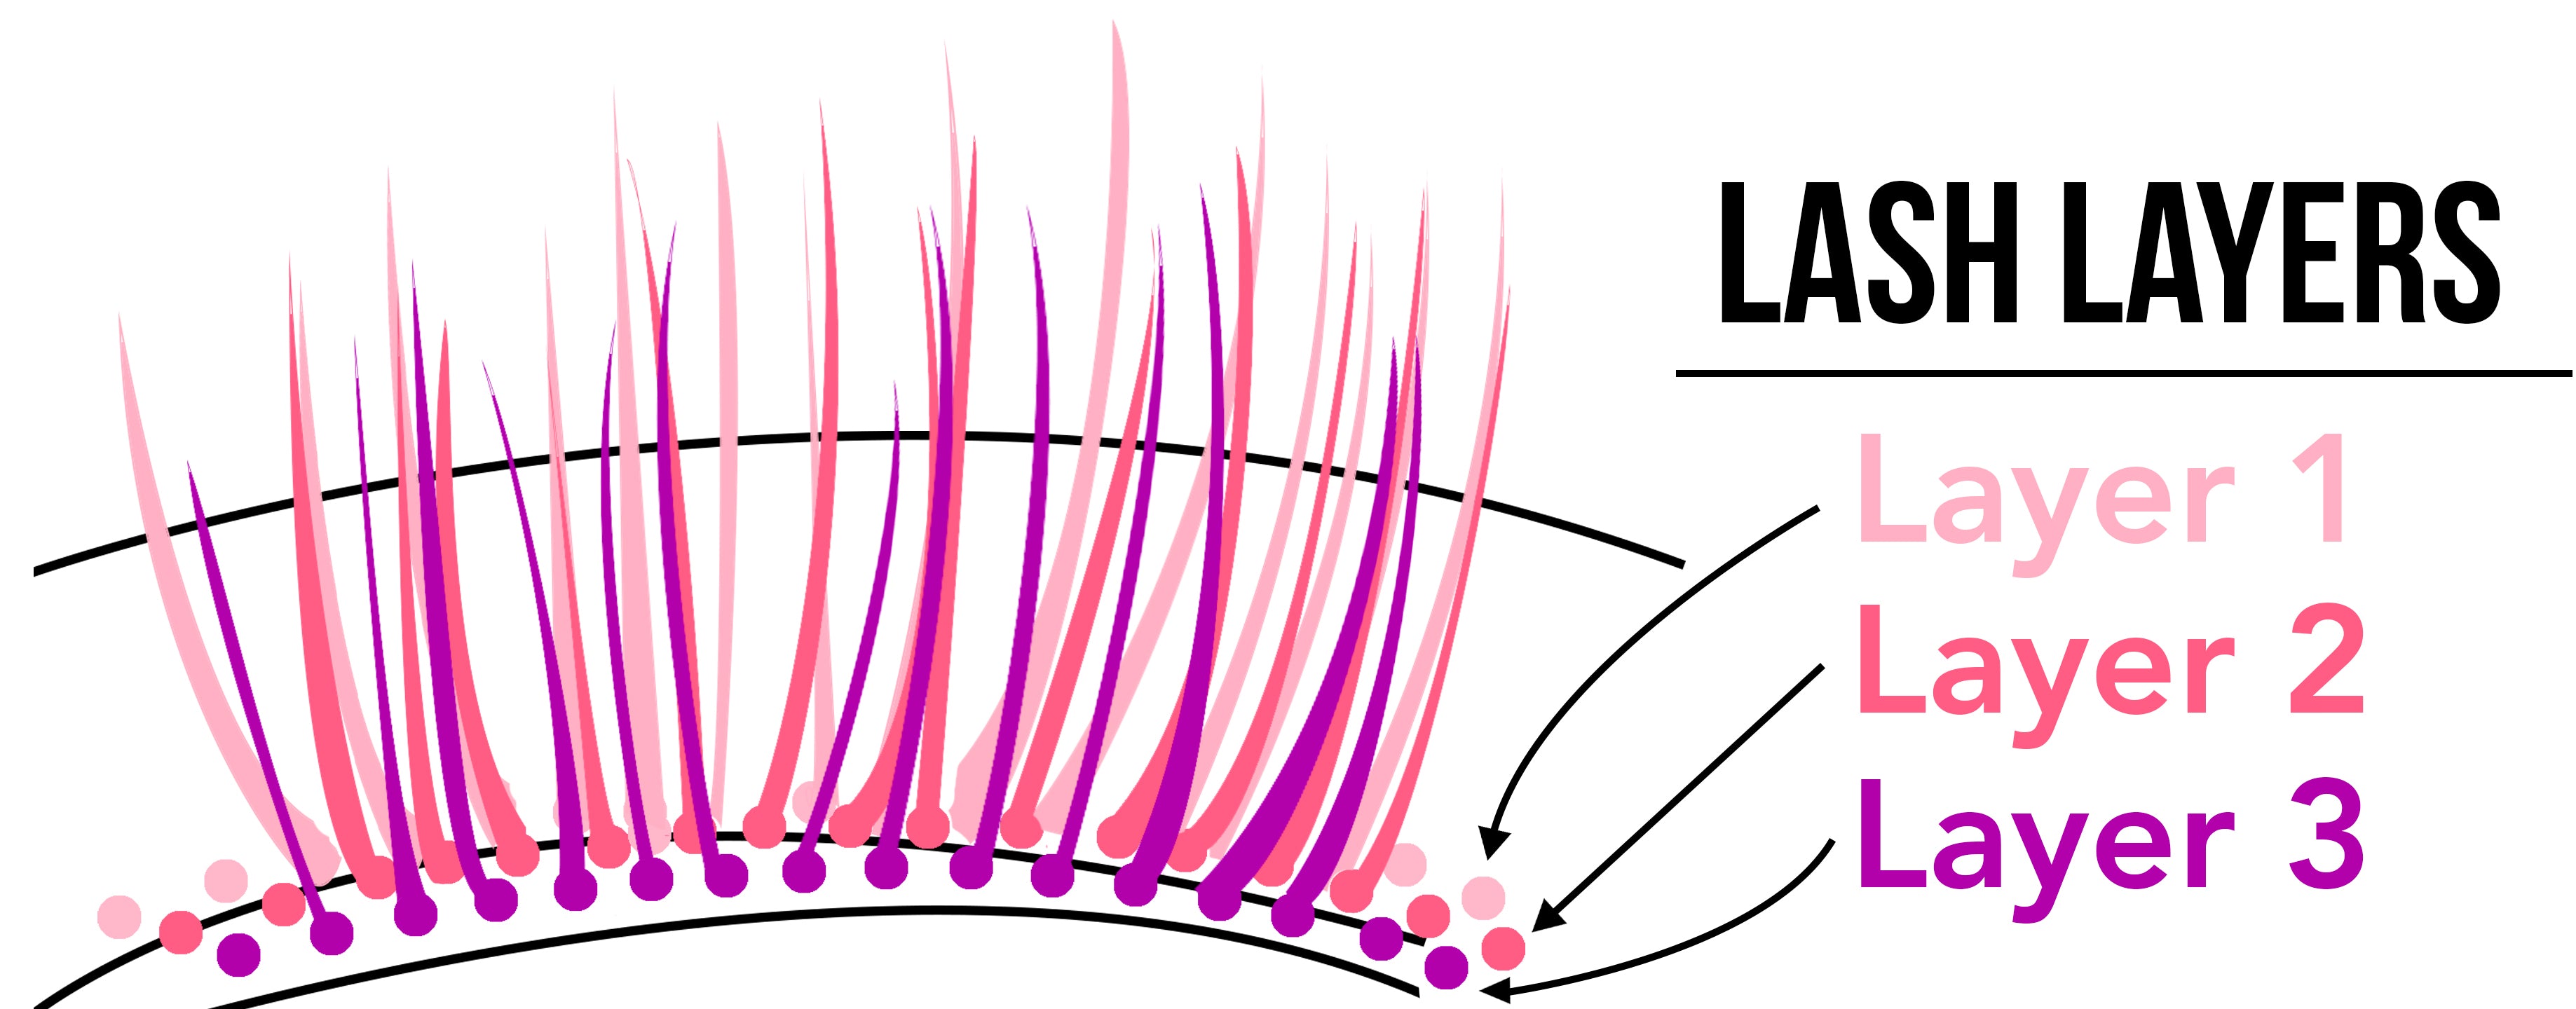 lash layers diagram